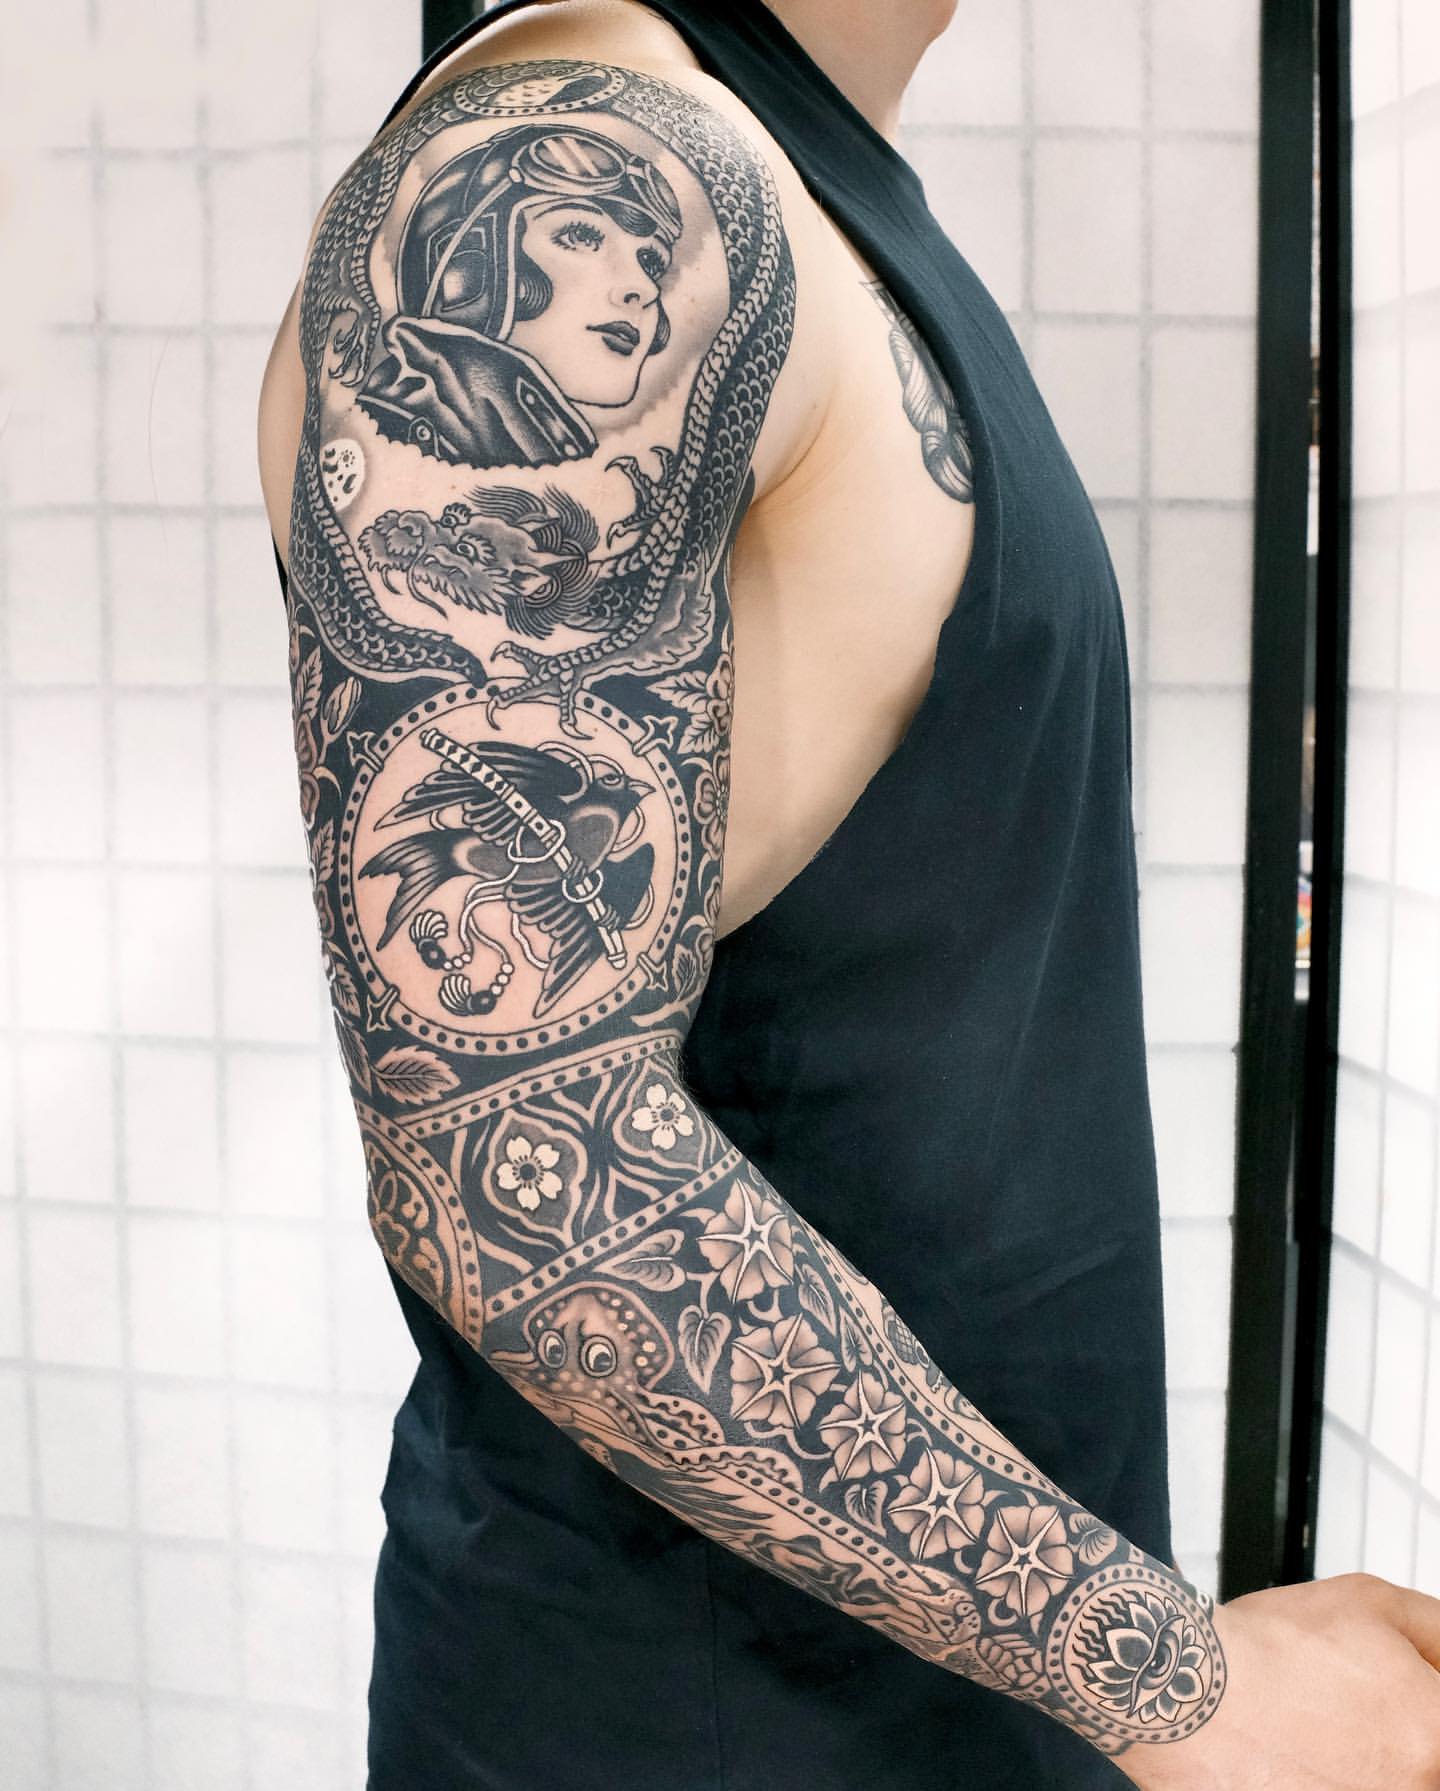 Chris Morris | Tattoo Artist